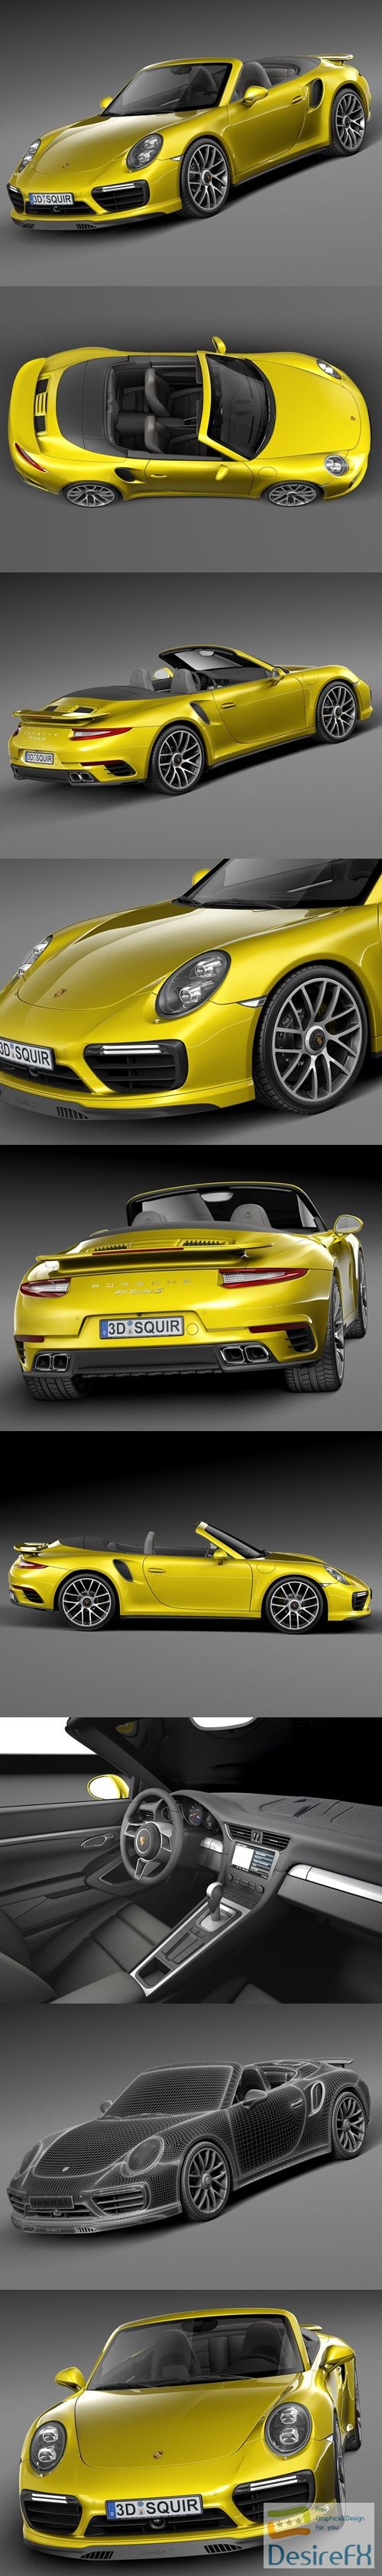 Porsche 911 Turbo S Convertible 2016 3D Model